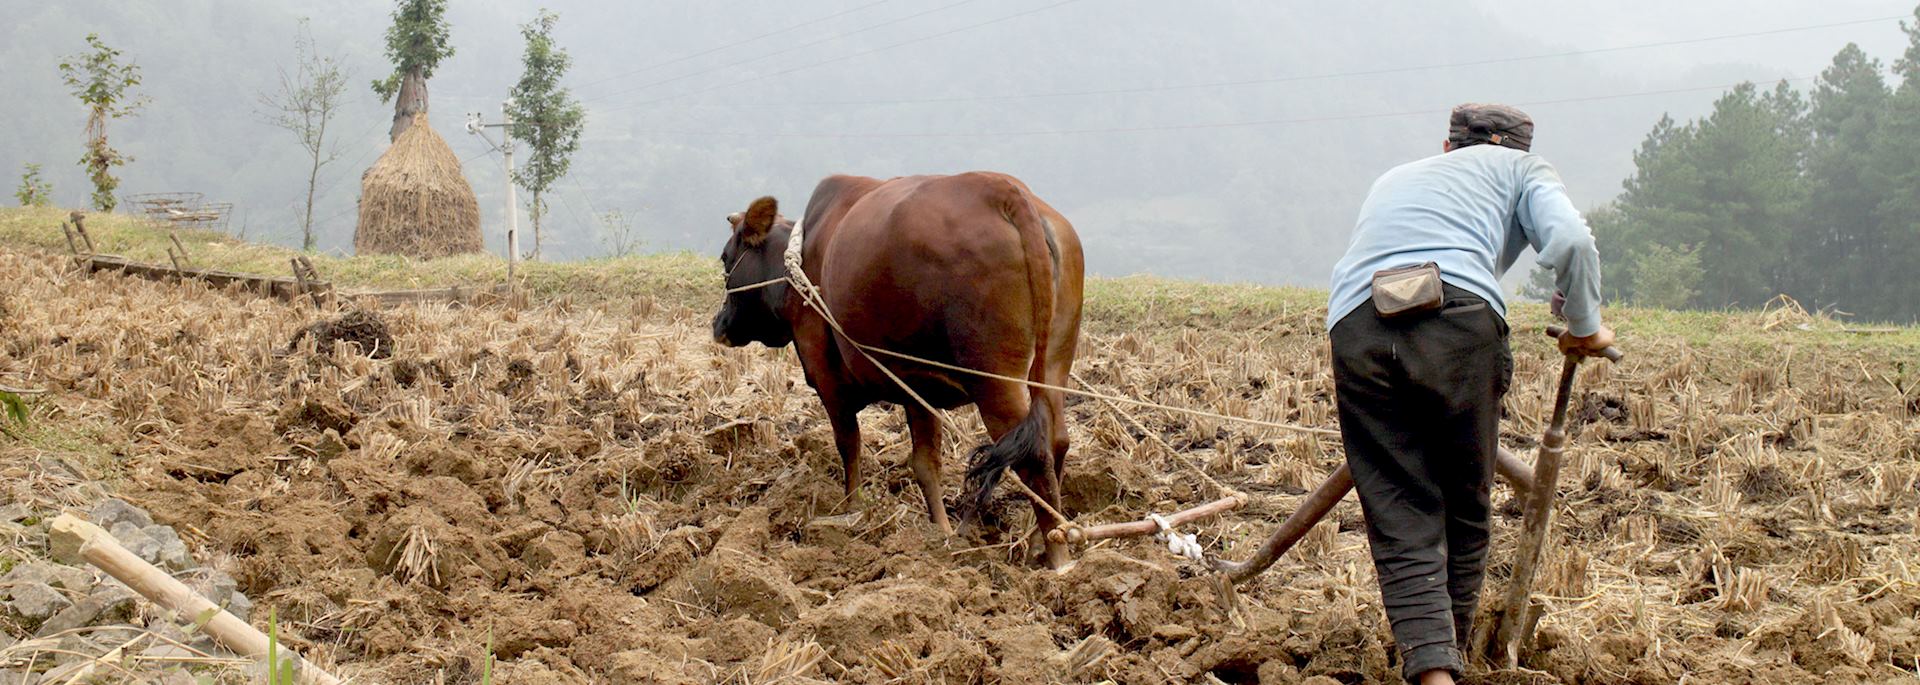 Back to basics with a buffalo and hand pushed plough in Wajiao village, Guizhou province